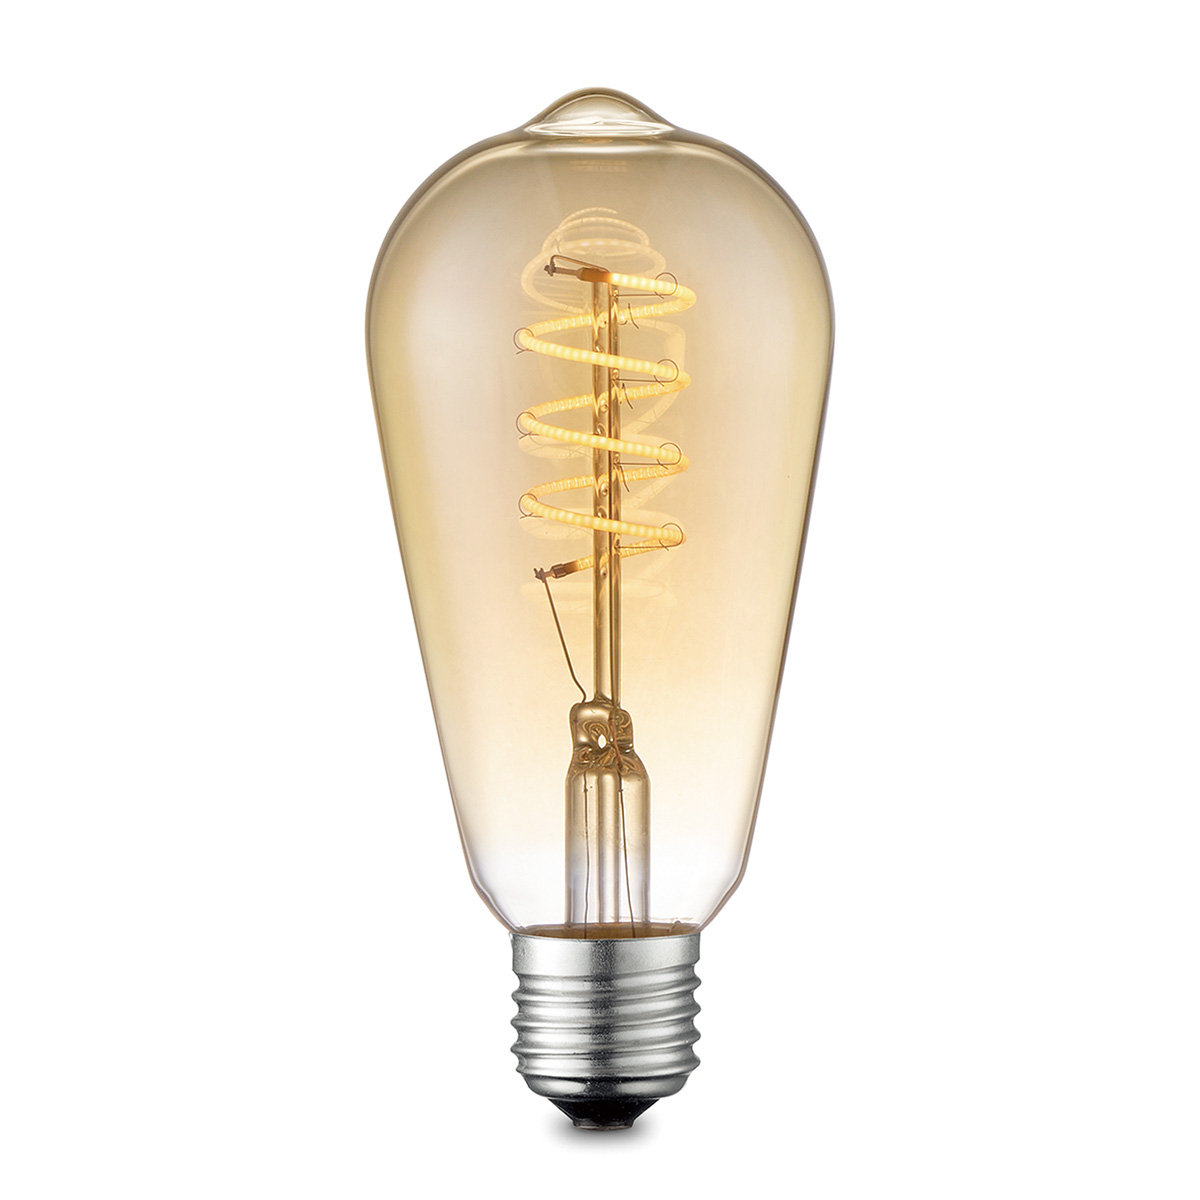 Tangla lighting - TLB-8002-04AM - LED Light Bulb Single Spiral filament - ST64 4W amber - dimmable - E27